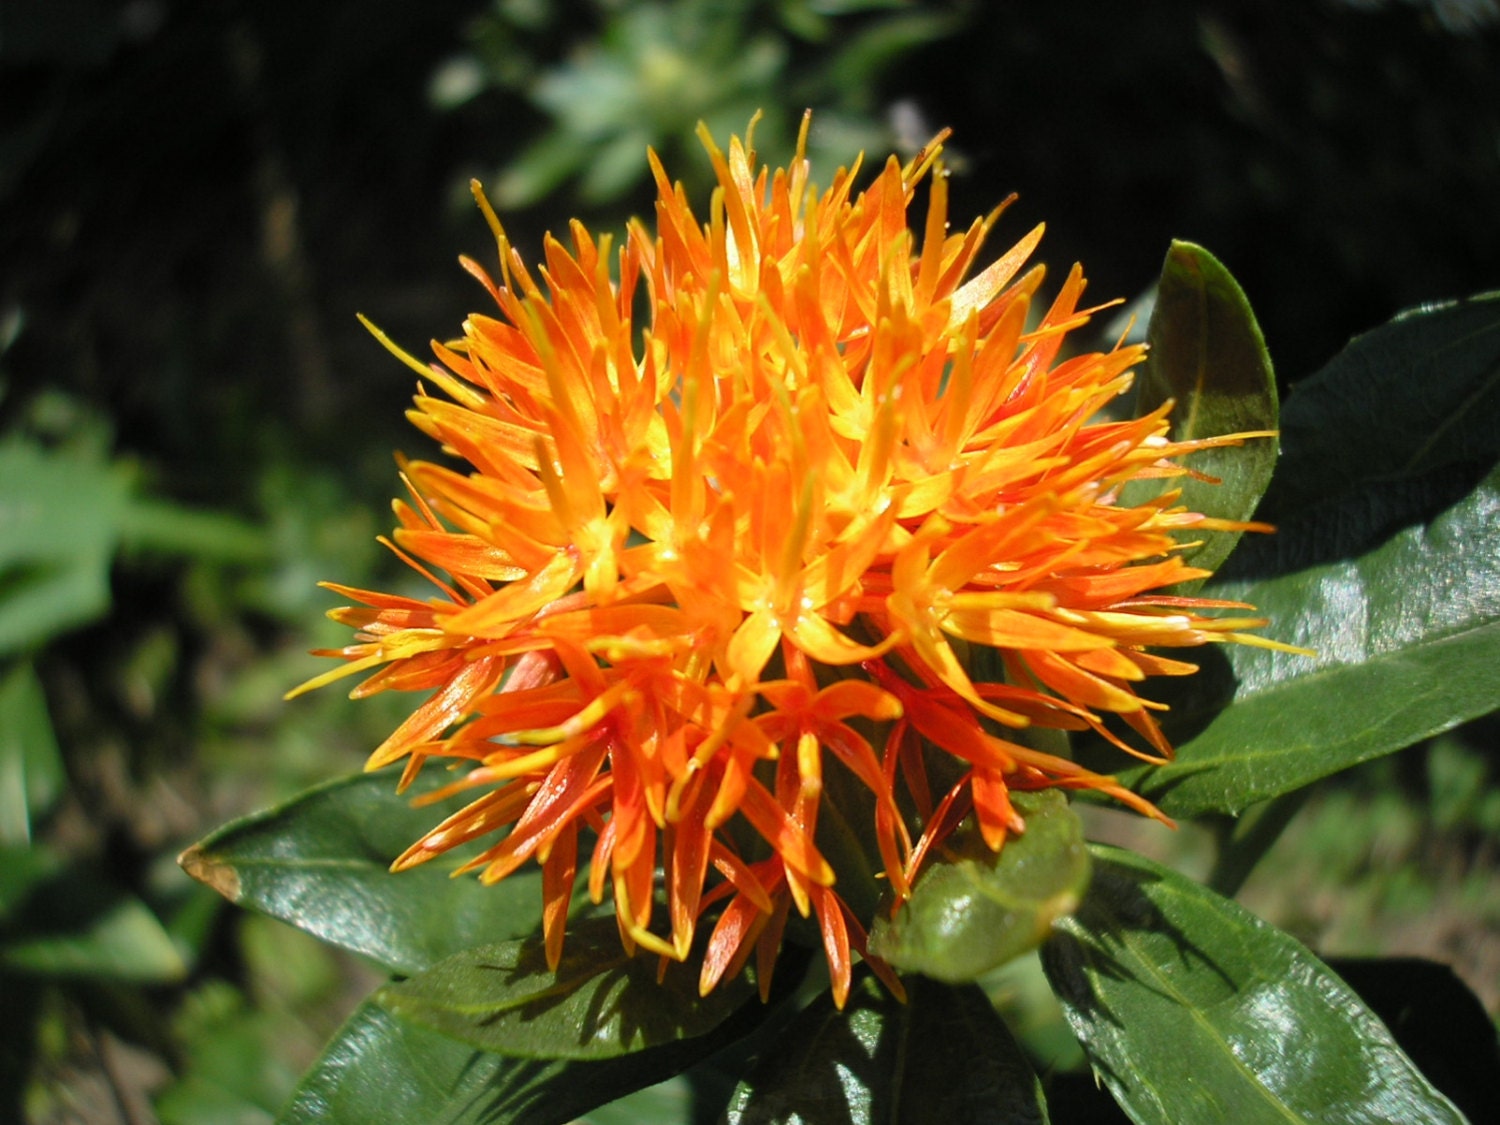 Safflower Petals Herbal Tea - Loose - First sip of tea - Floral, Decaf –  The Spice Hut